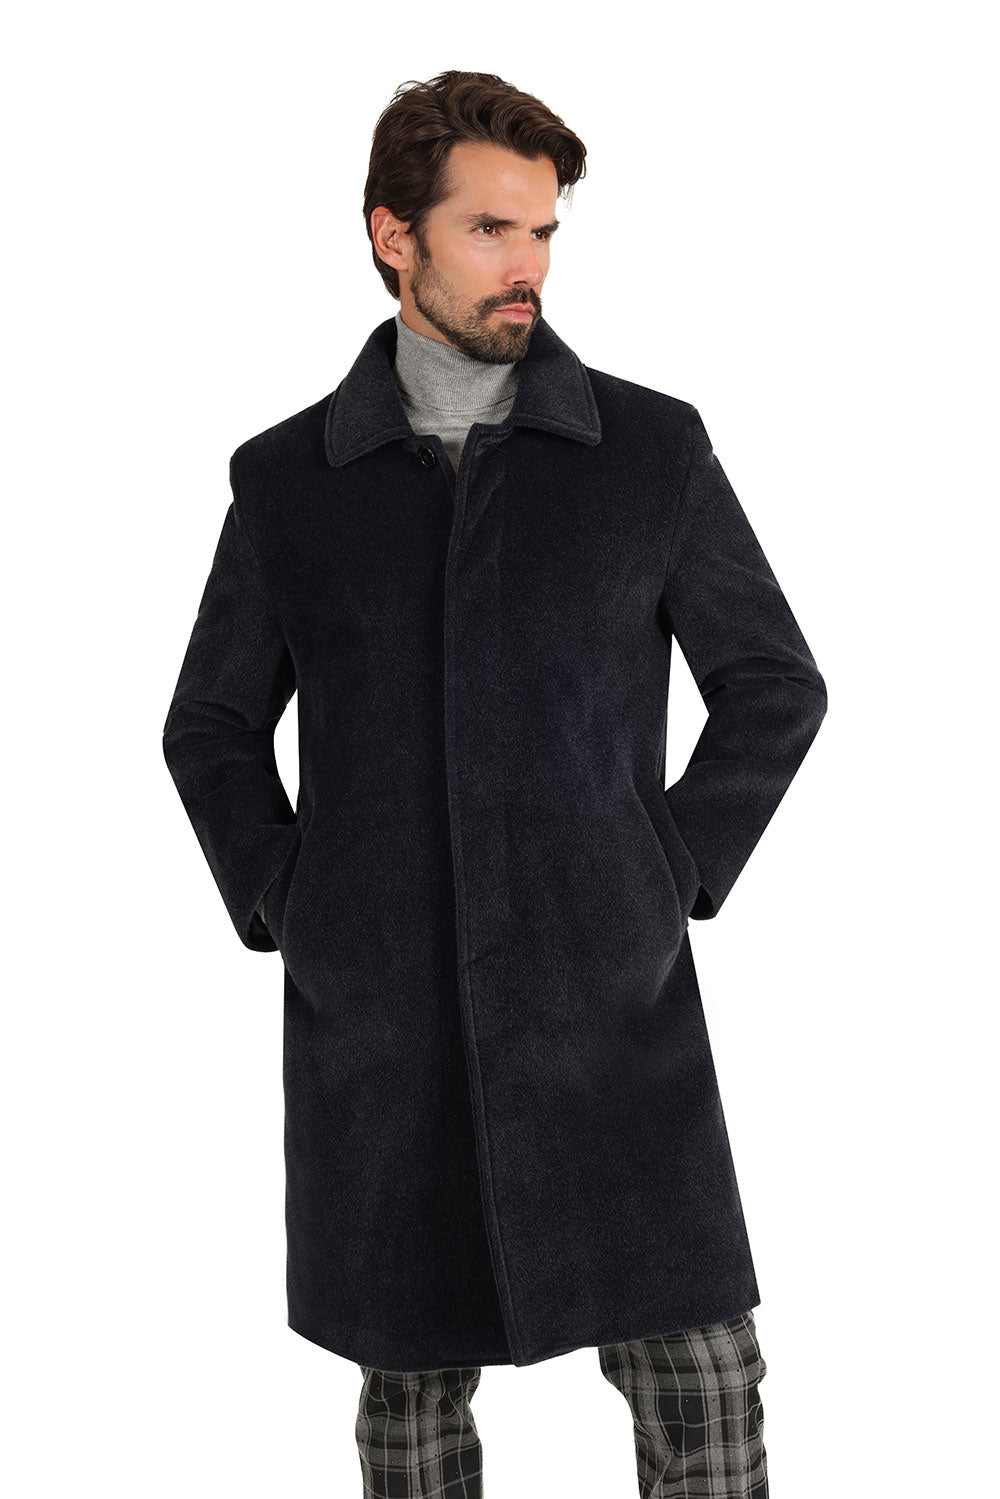 Barabas Men's Solid Color Luxury Collared Over Coat Jacket 2JLW01 Charcoal